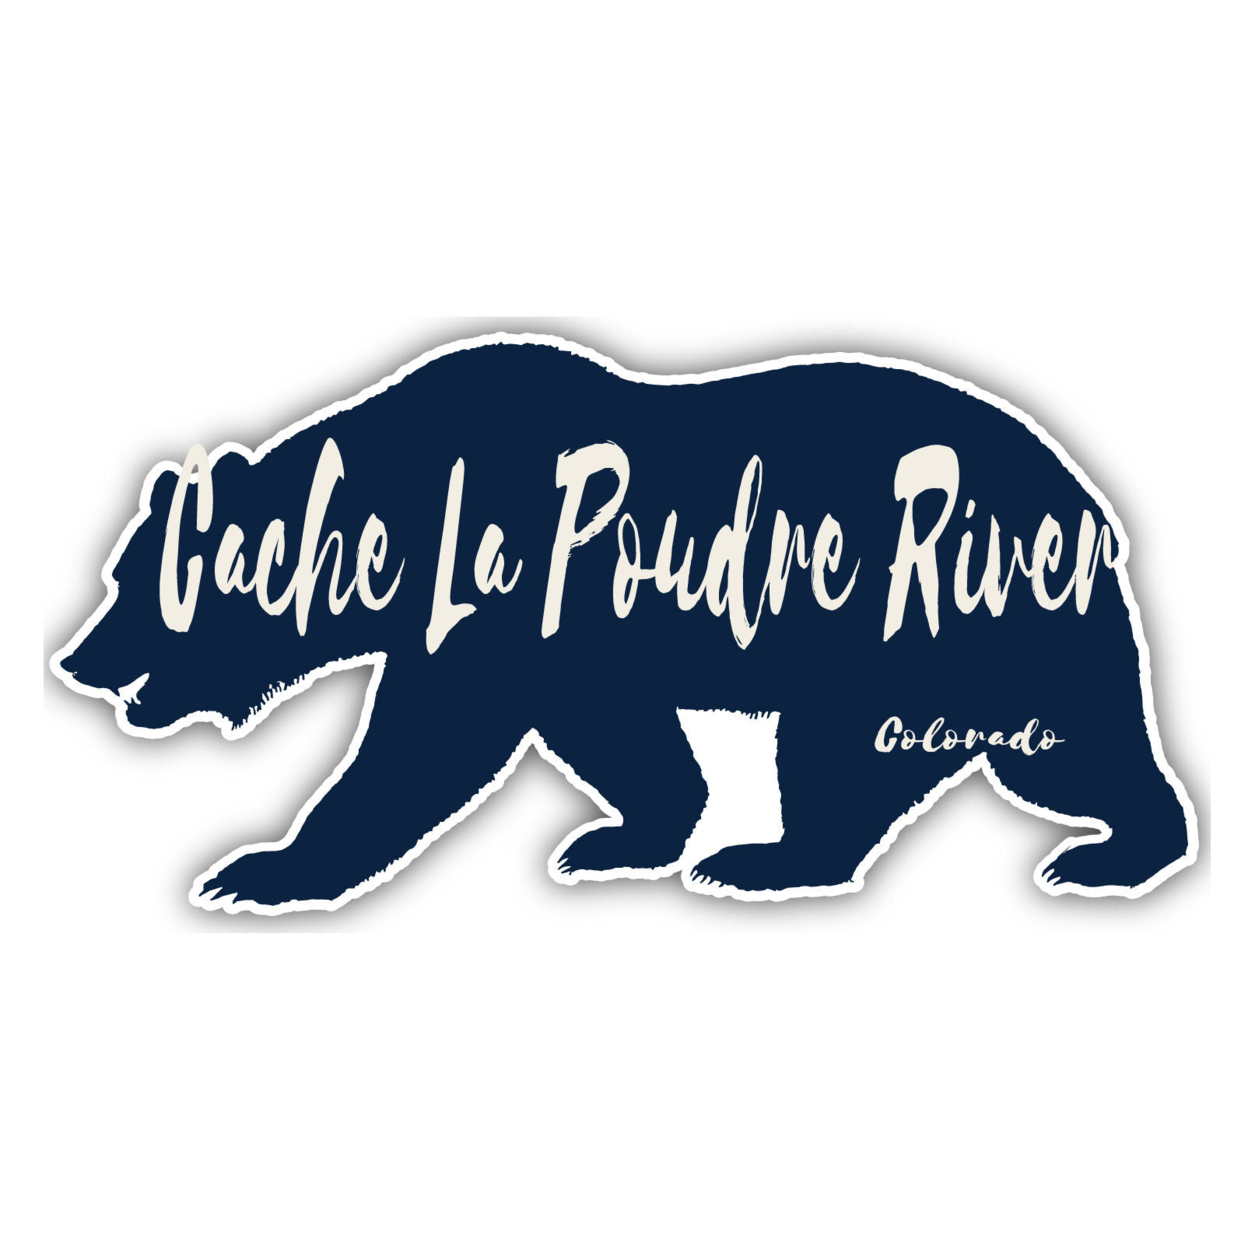 Cache La Poudre River Colorado Souvenir Decorative Stickers (Choose Theme And Size) - 4-Pack, 12-Inch, Camp Life